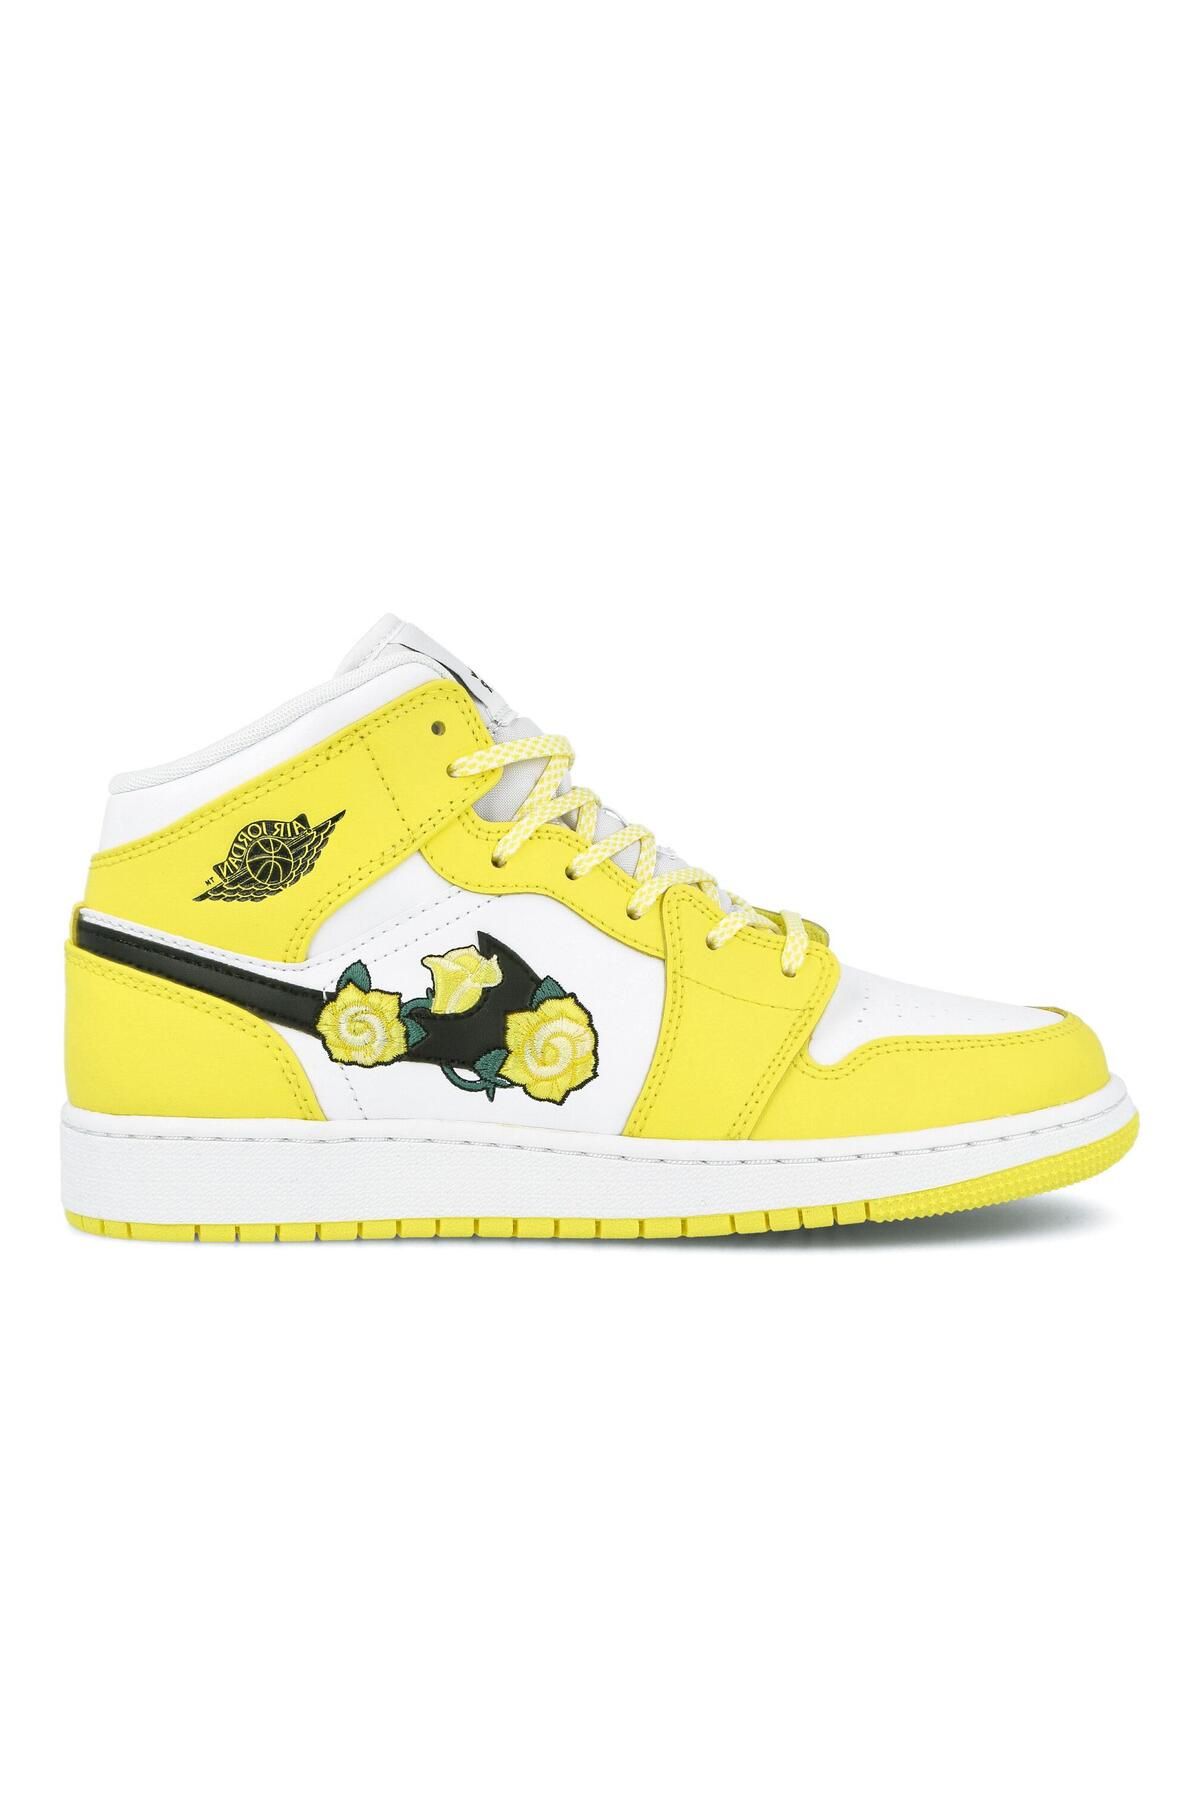 Nike Jordan 1 Mid Dynamic Yellow Floral (gs) Av5174-700